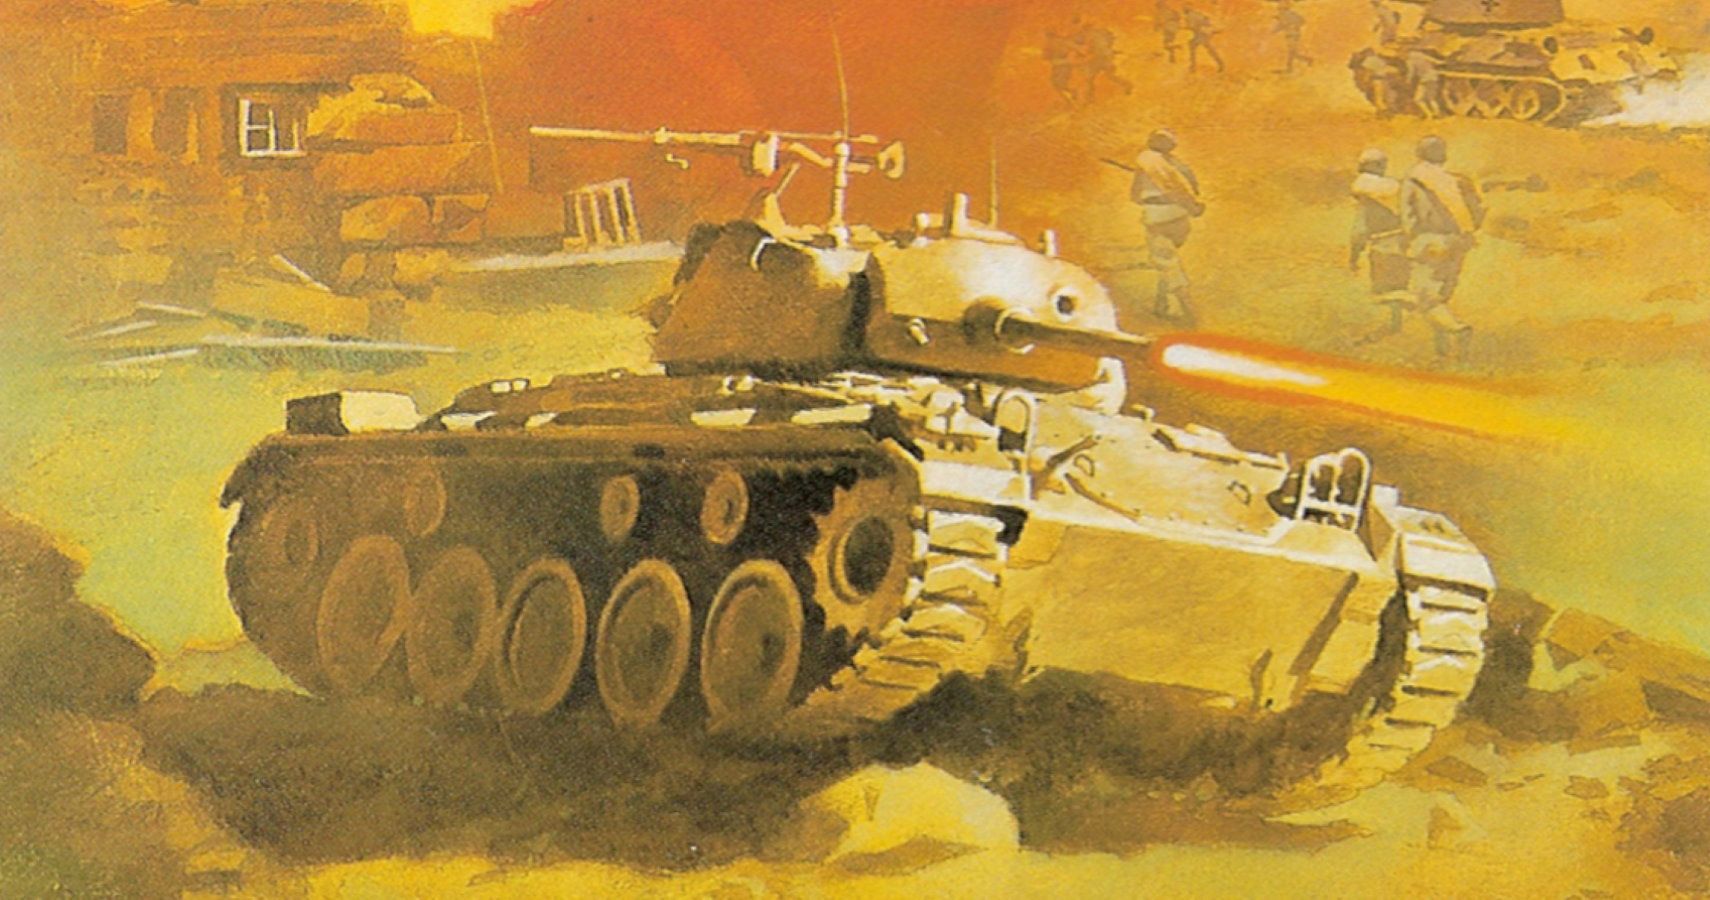 Iron tank